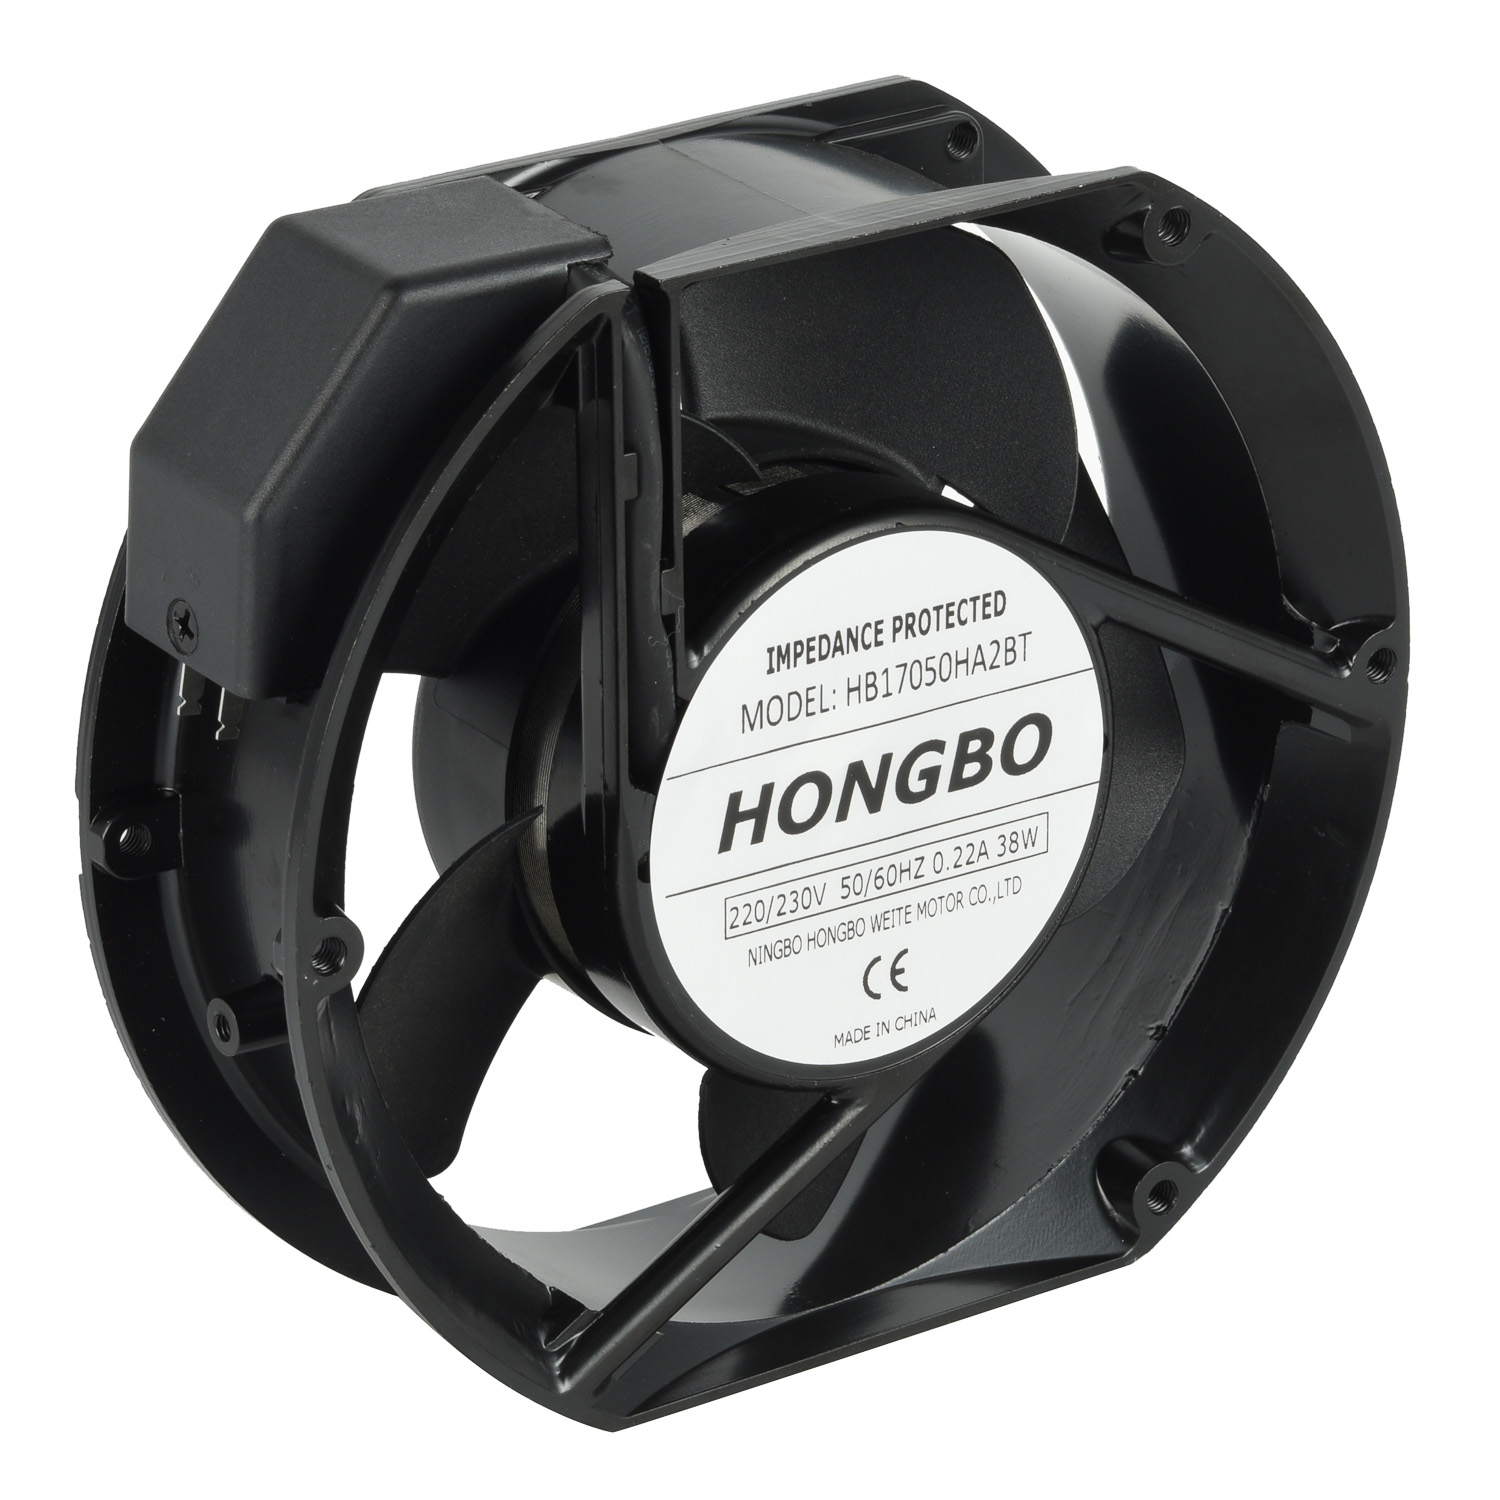 Hongbo AC 17251 High Airflow 172x150x51mm 110V/220V Industrial Axial Fan